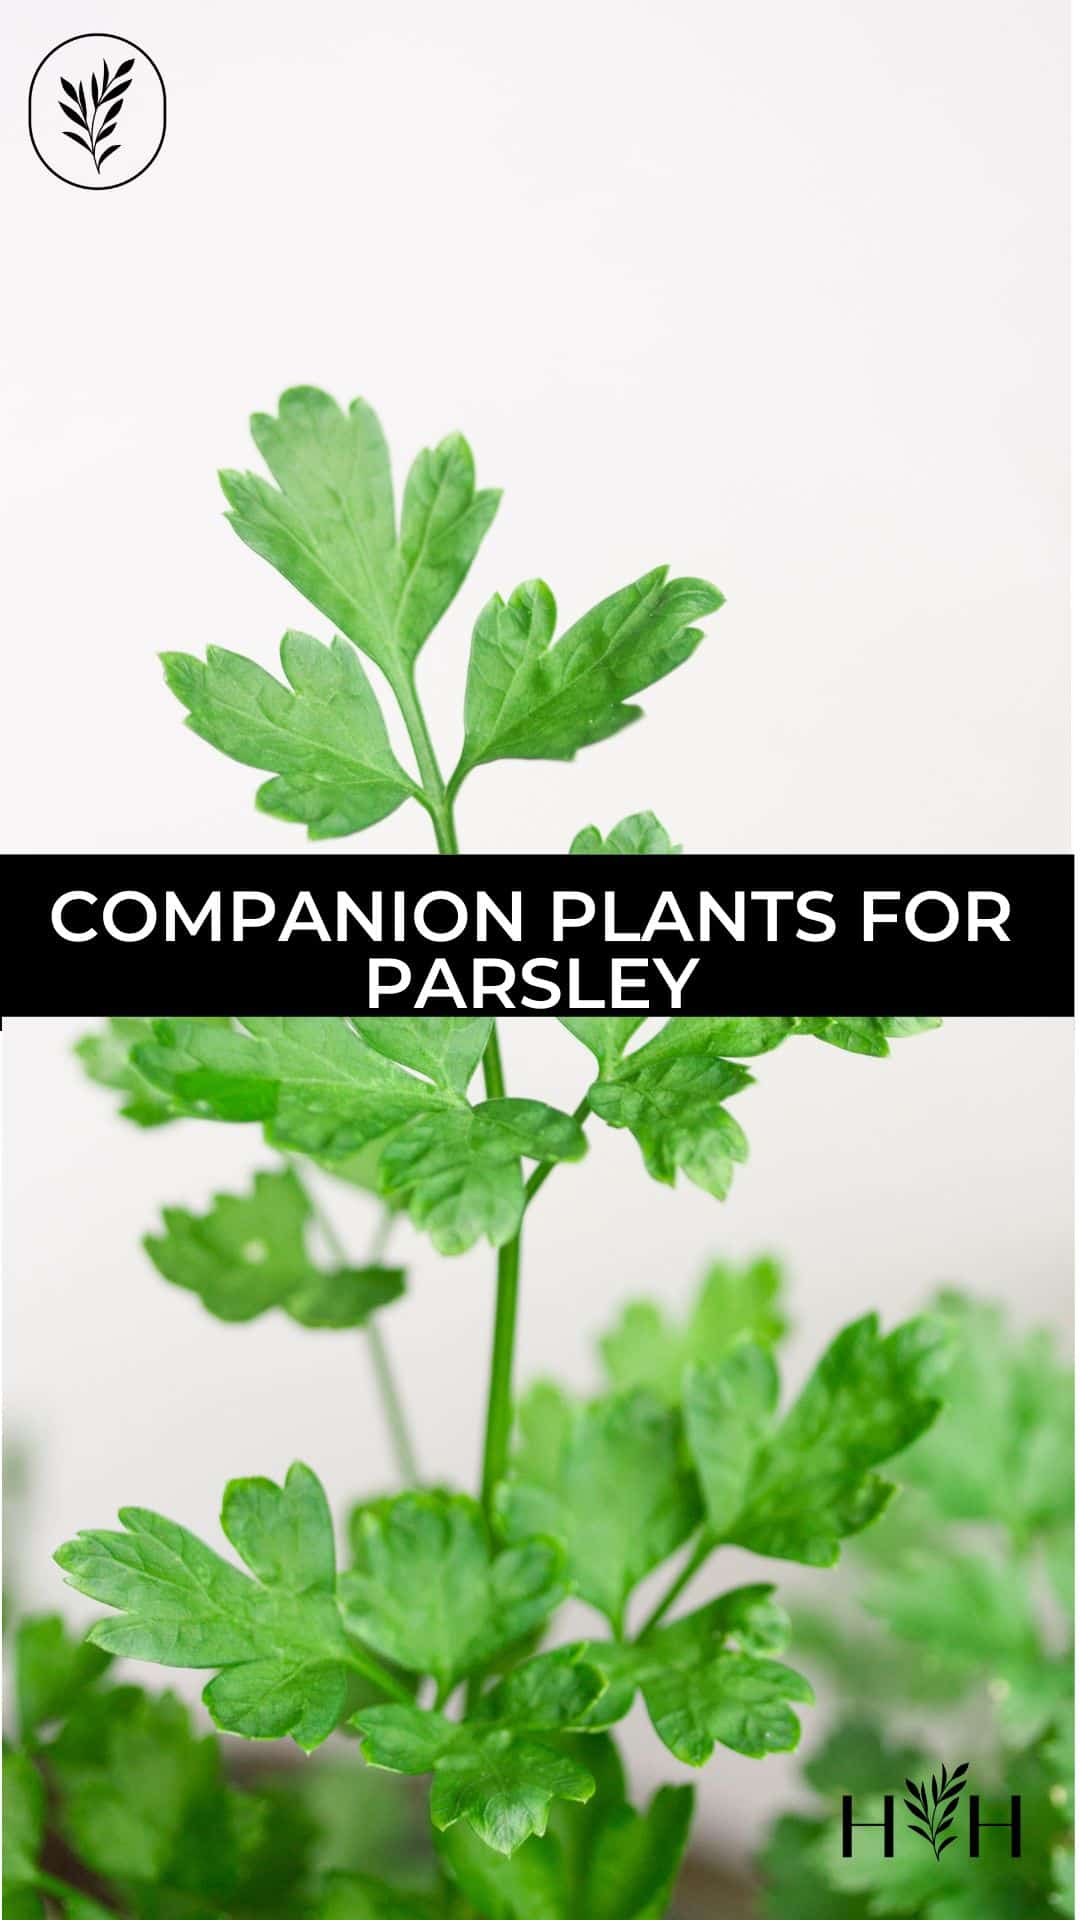 Companion plants for parsley via @home4theharvest